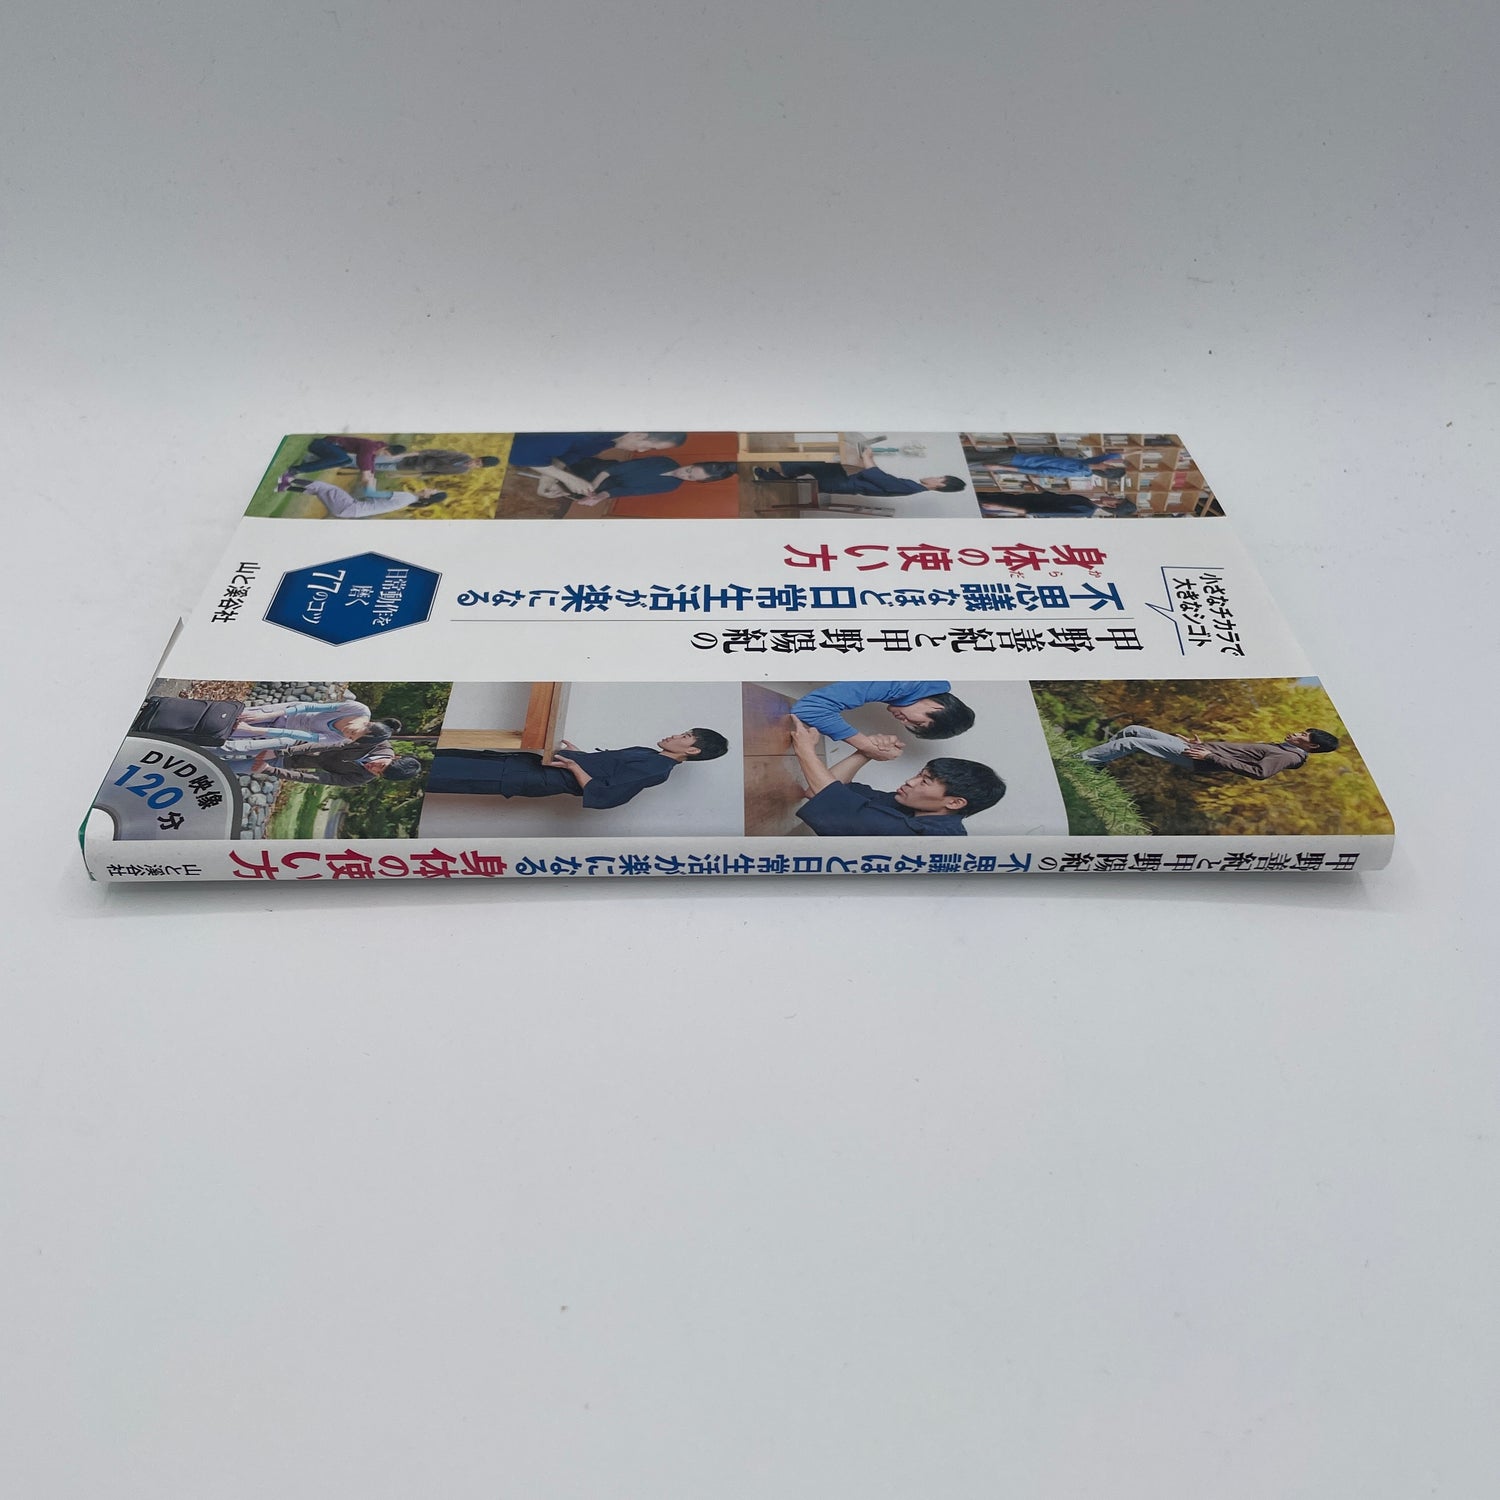 How to Use Your Body in Daily Life Book & DVD by Yoshinori & Yoki Kono